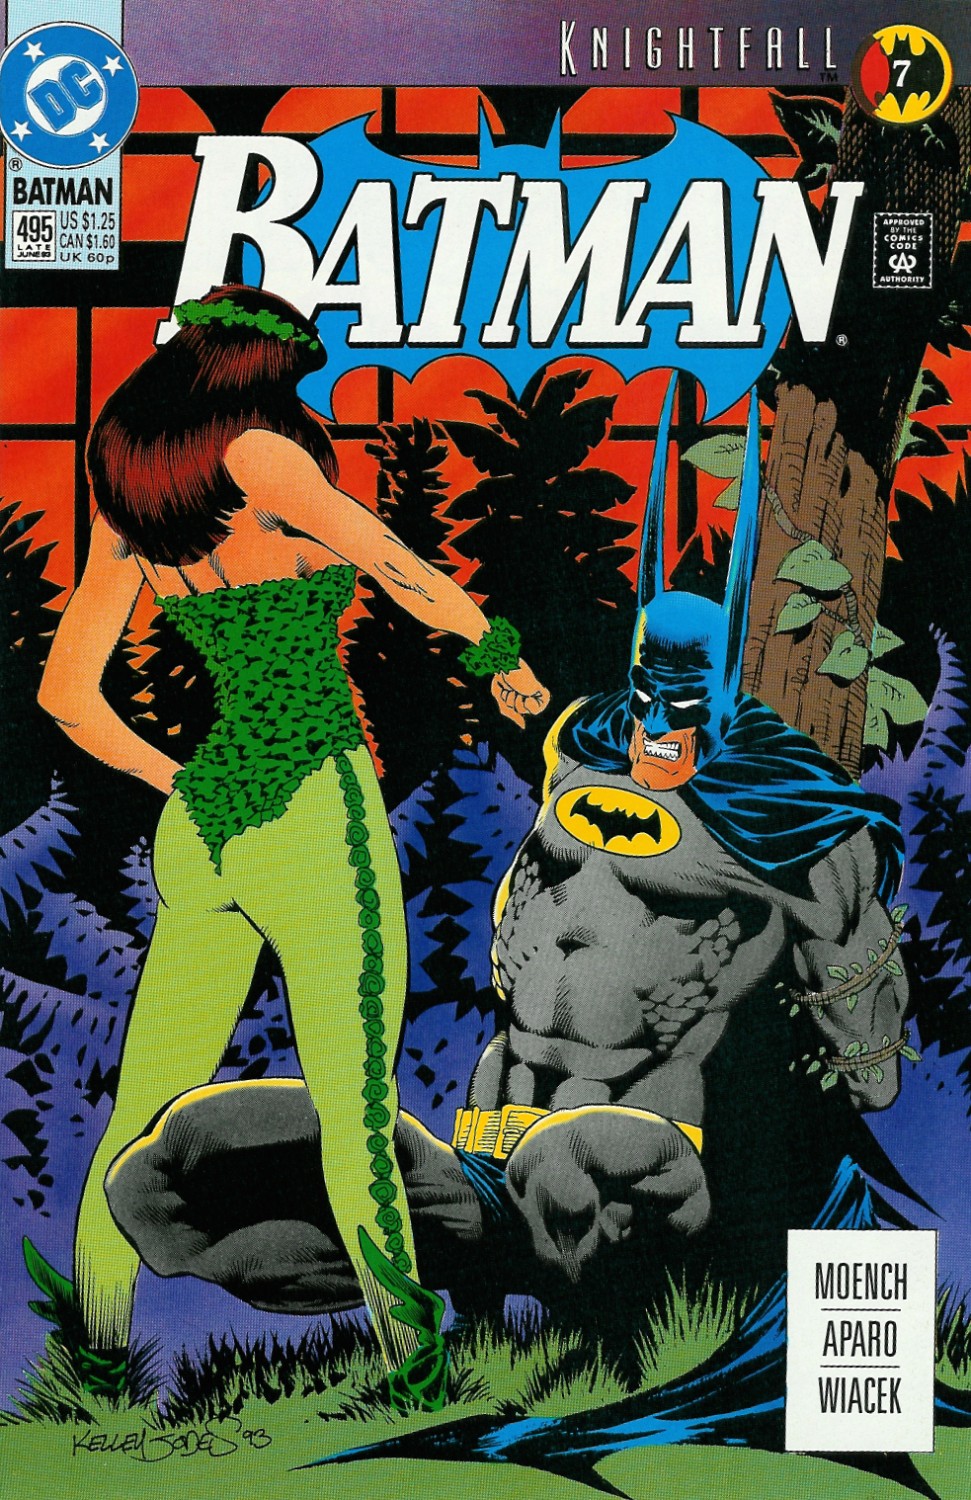 The Top Ten Batman Covers from Each Era (Part 4 – The Modern Age